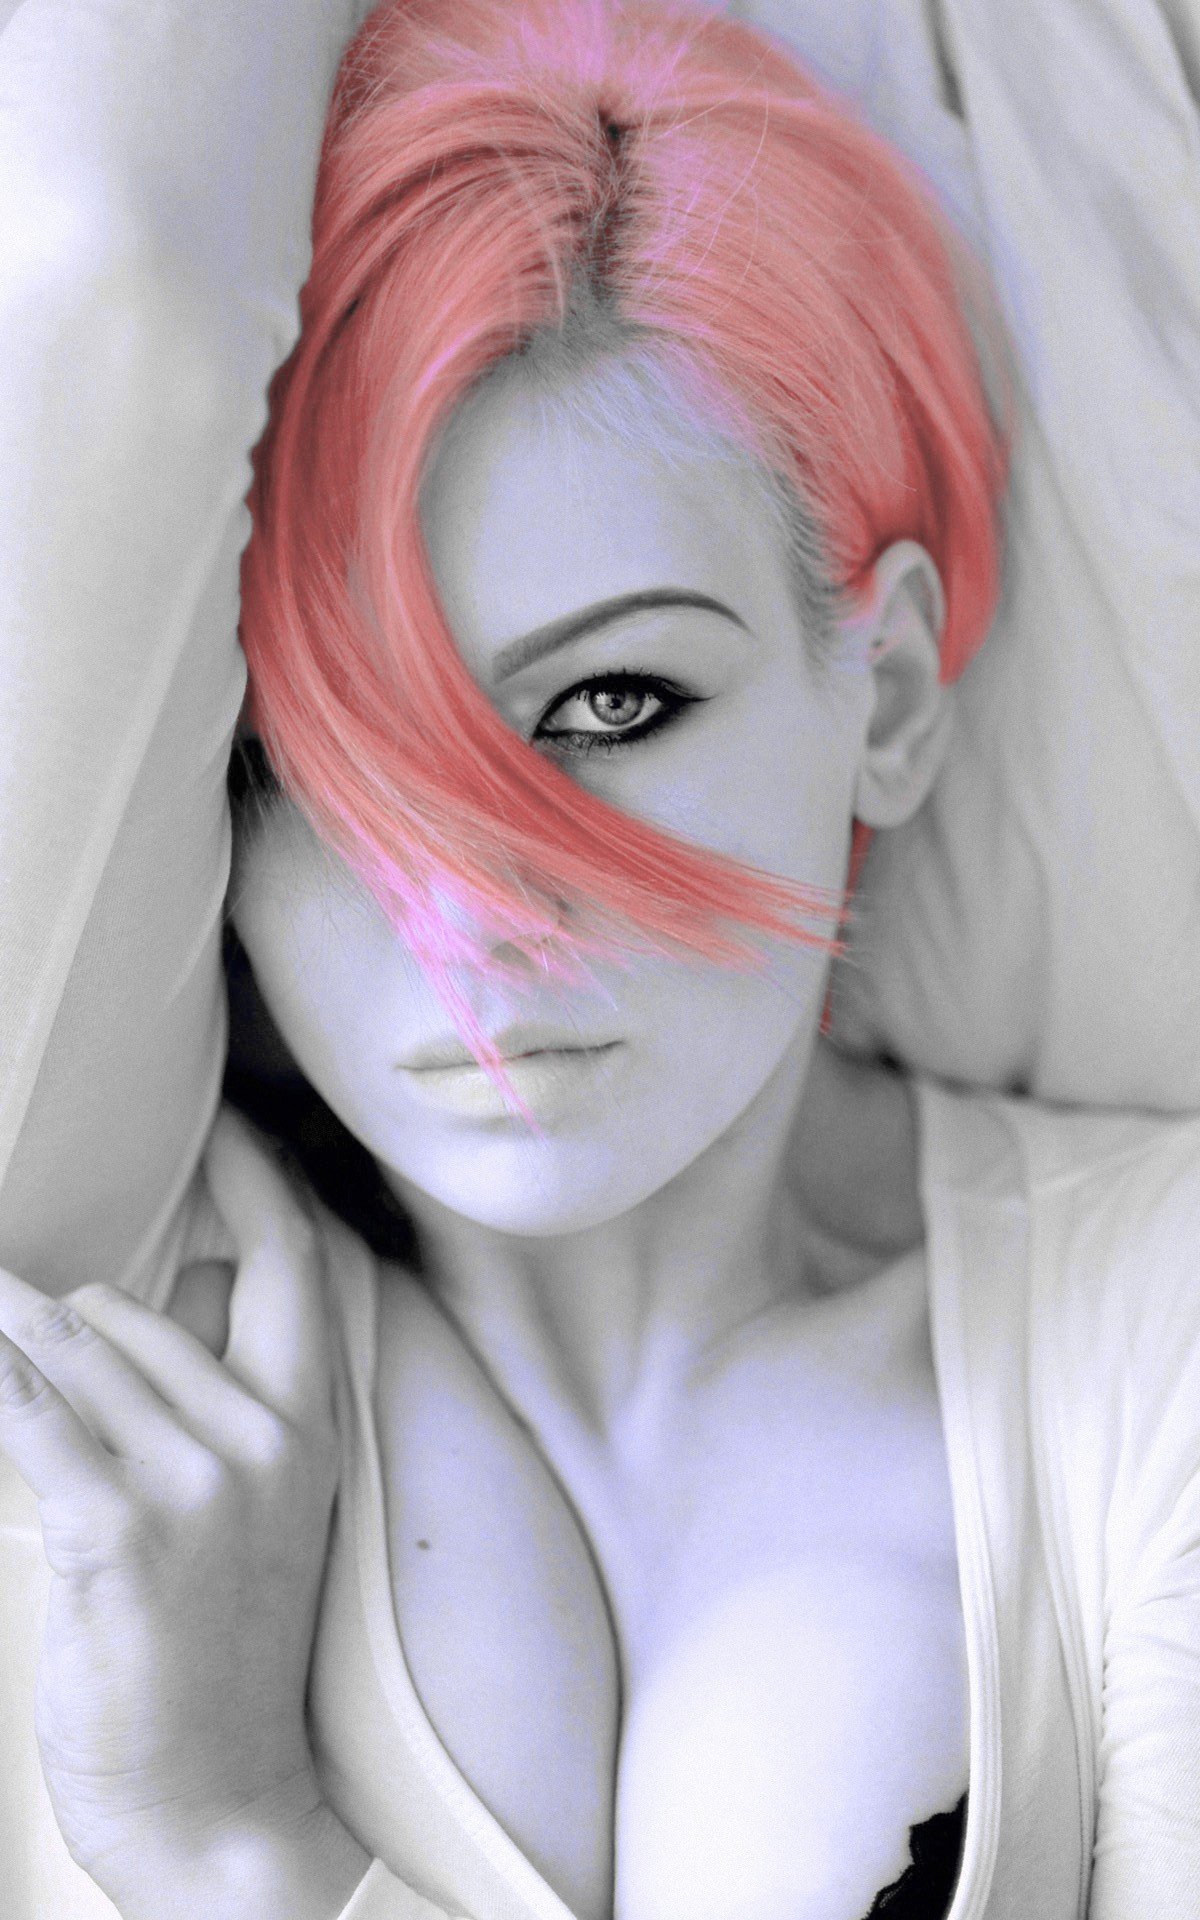 selective coloring, Adobe Photoshop, Pink hair, Model, Aleksandra Zenibyfajnie Wydrych, Cleavage Wallpaper